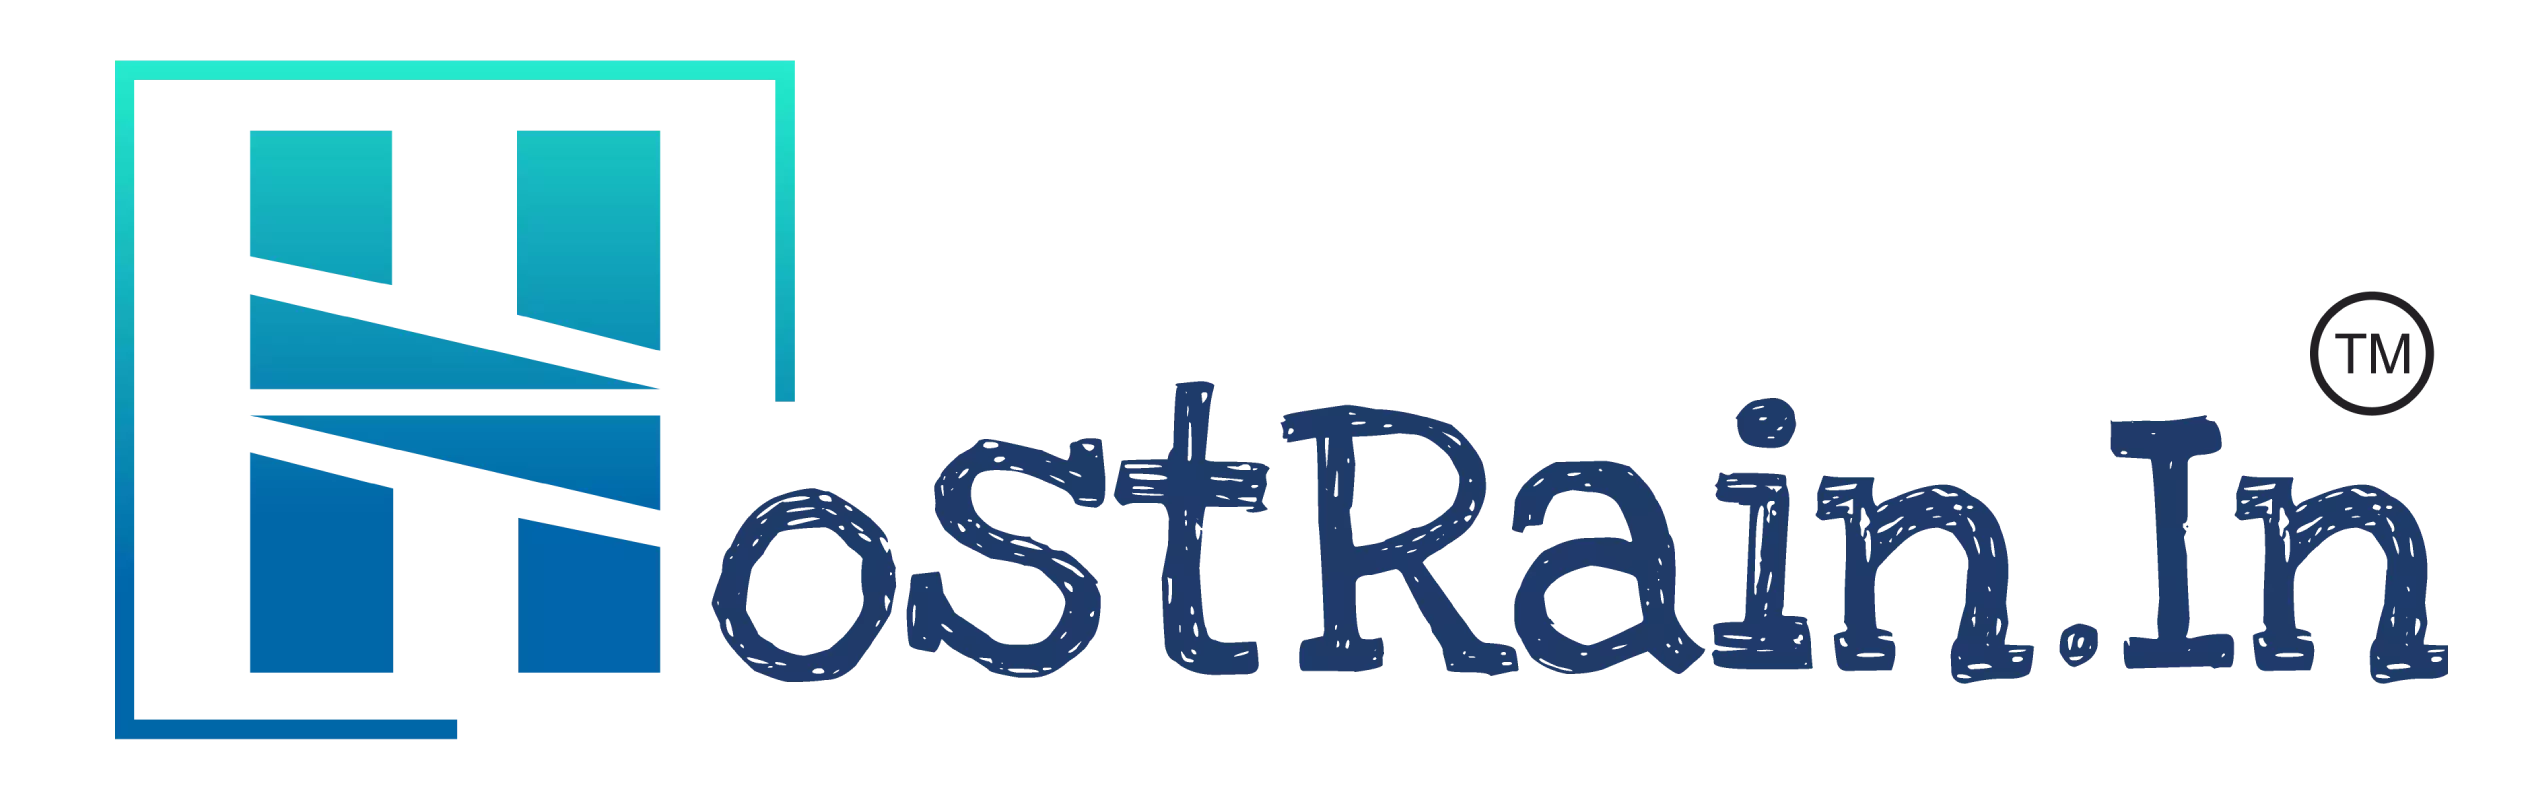 Hostrain logo